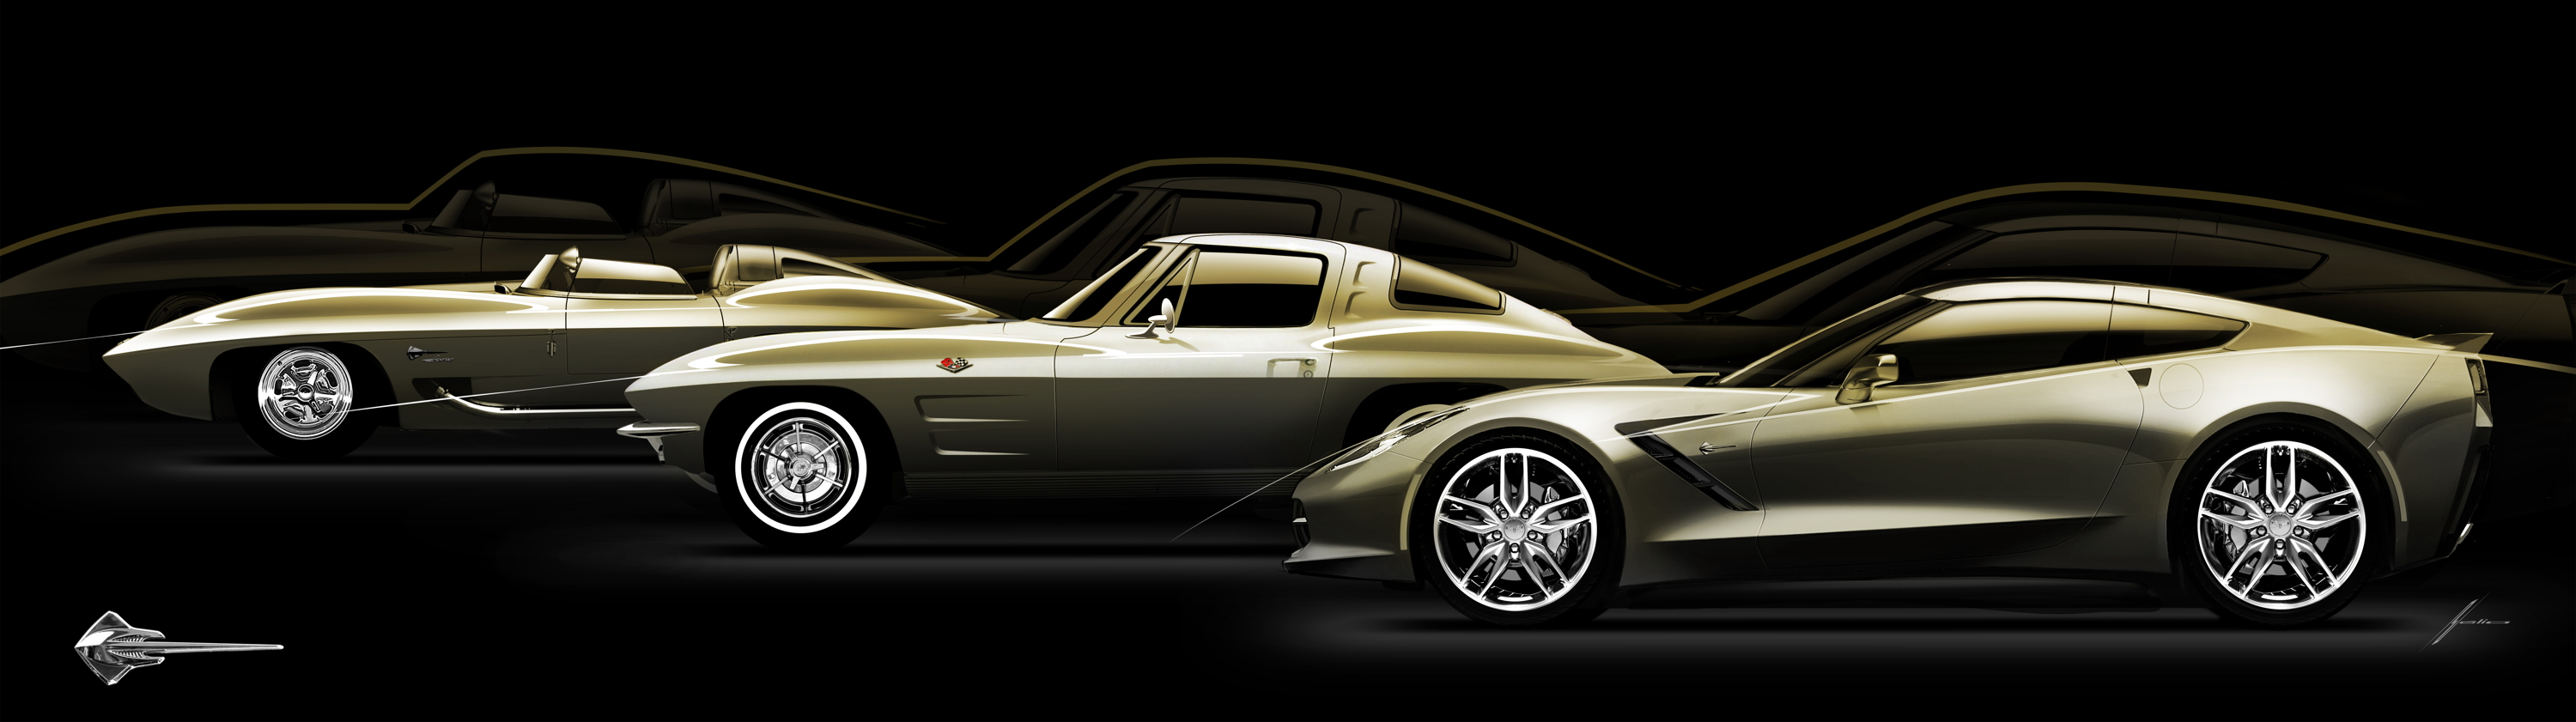 Concept Corvette Sting Ray Stingray HD Wallpaper